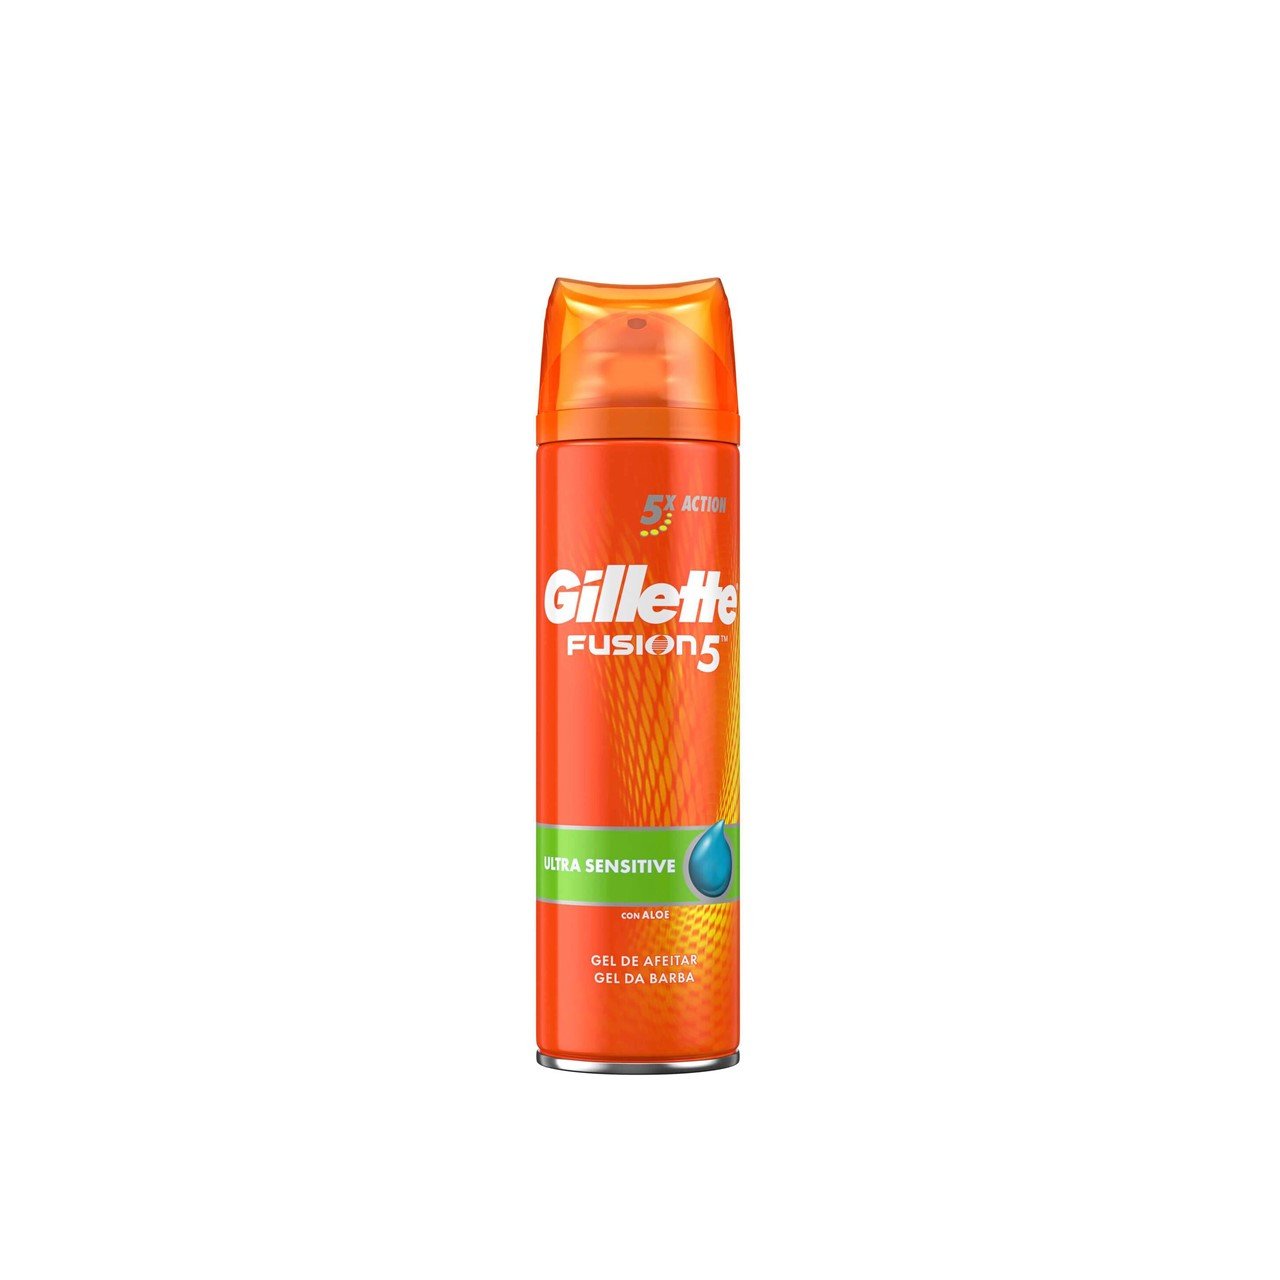 Gillette Fusion5 Ultra Sensitive Shaving Gel 200ml (6.76fl oz)